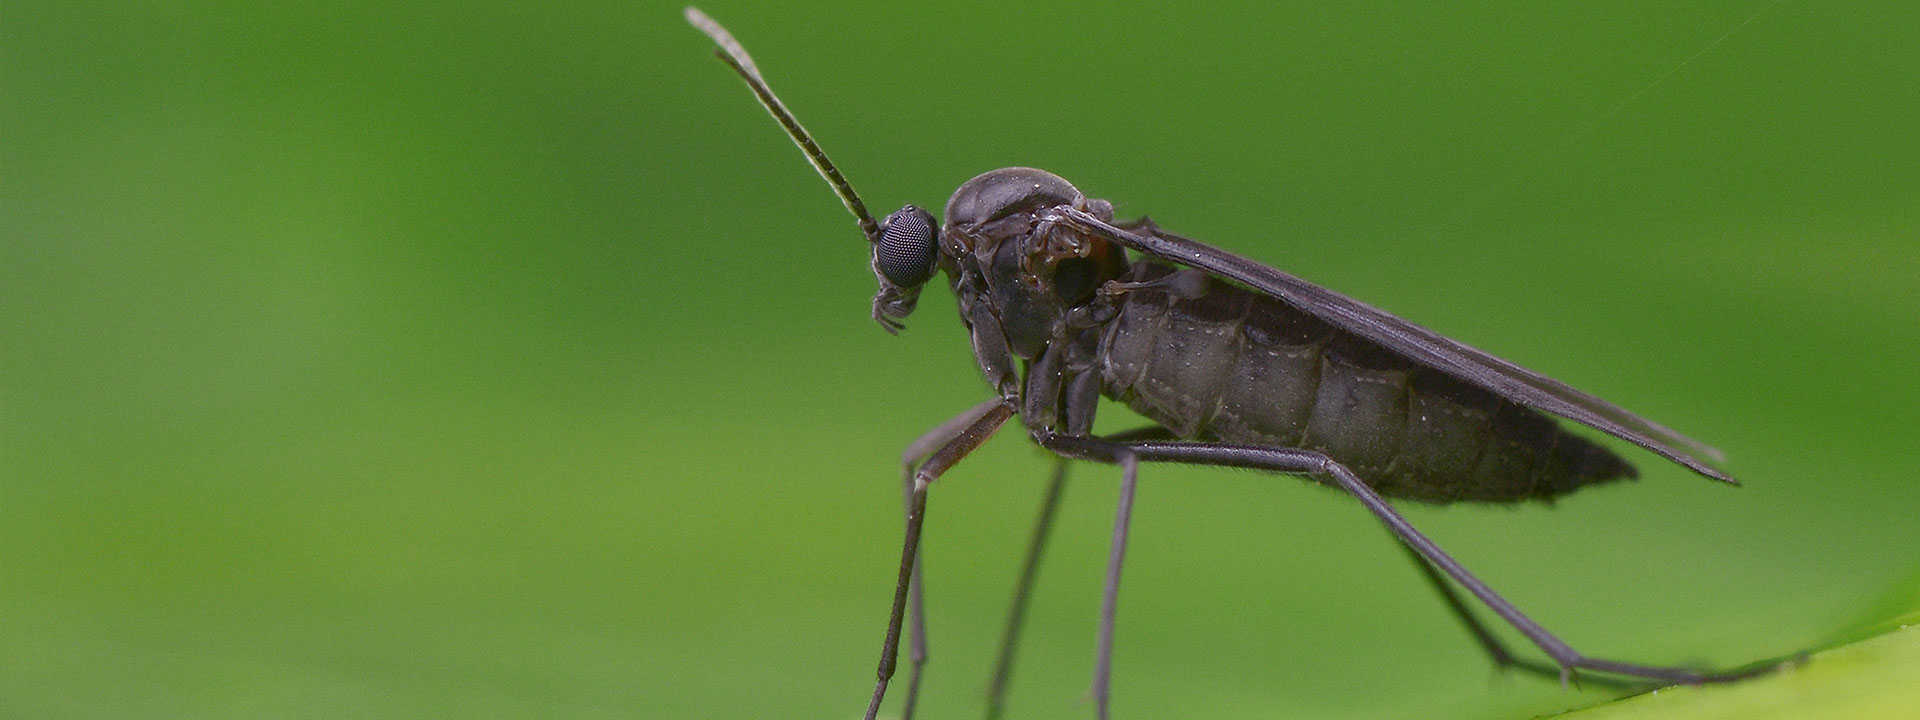 A closeup of a gnat on a leaf.